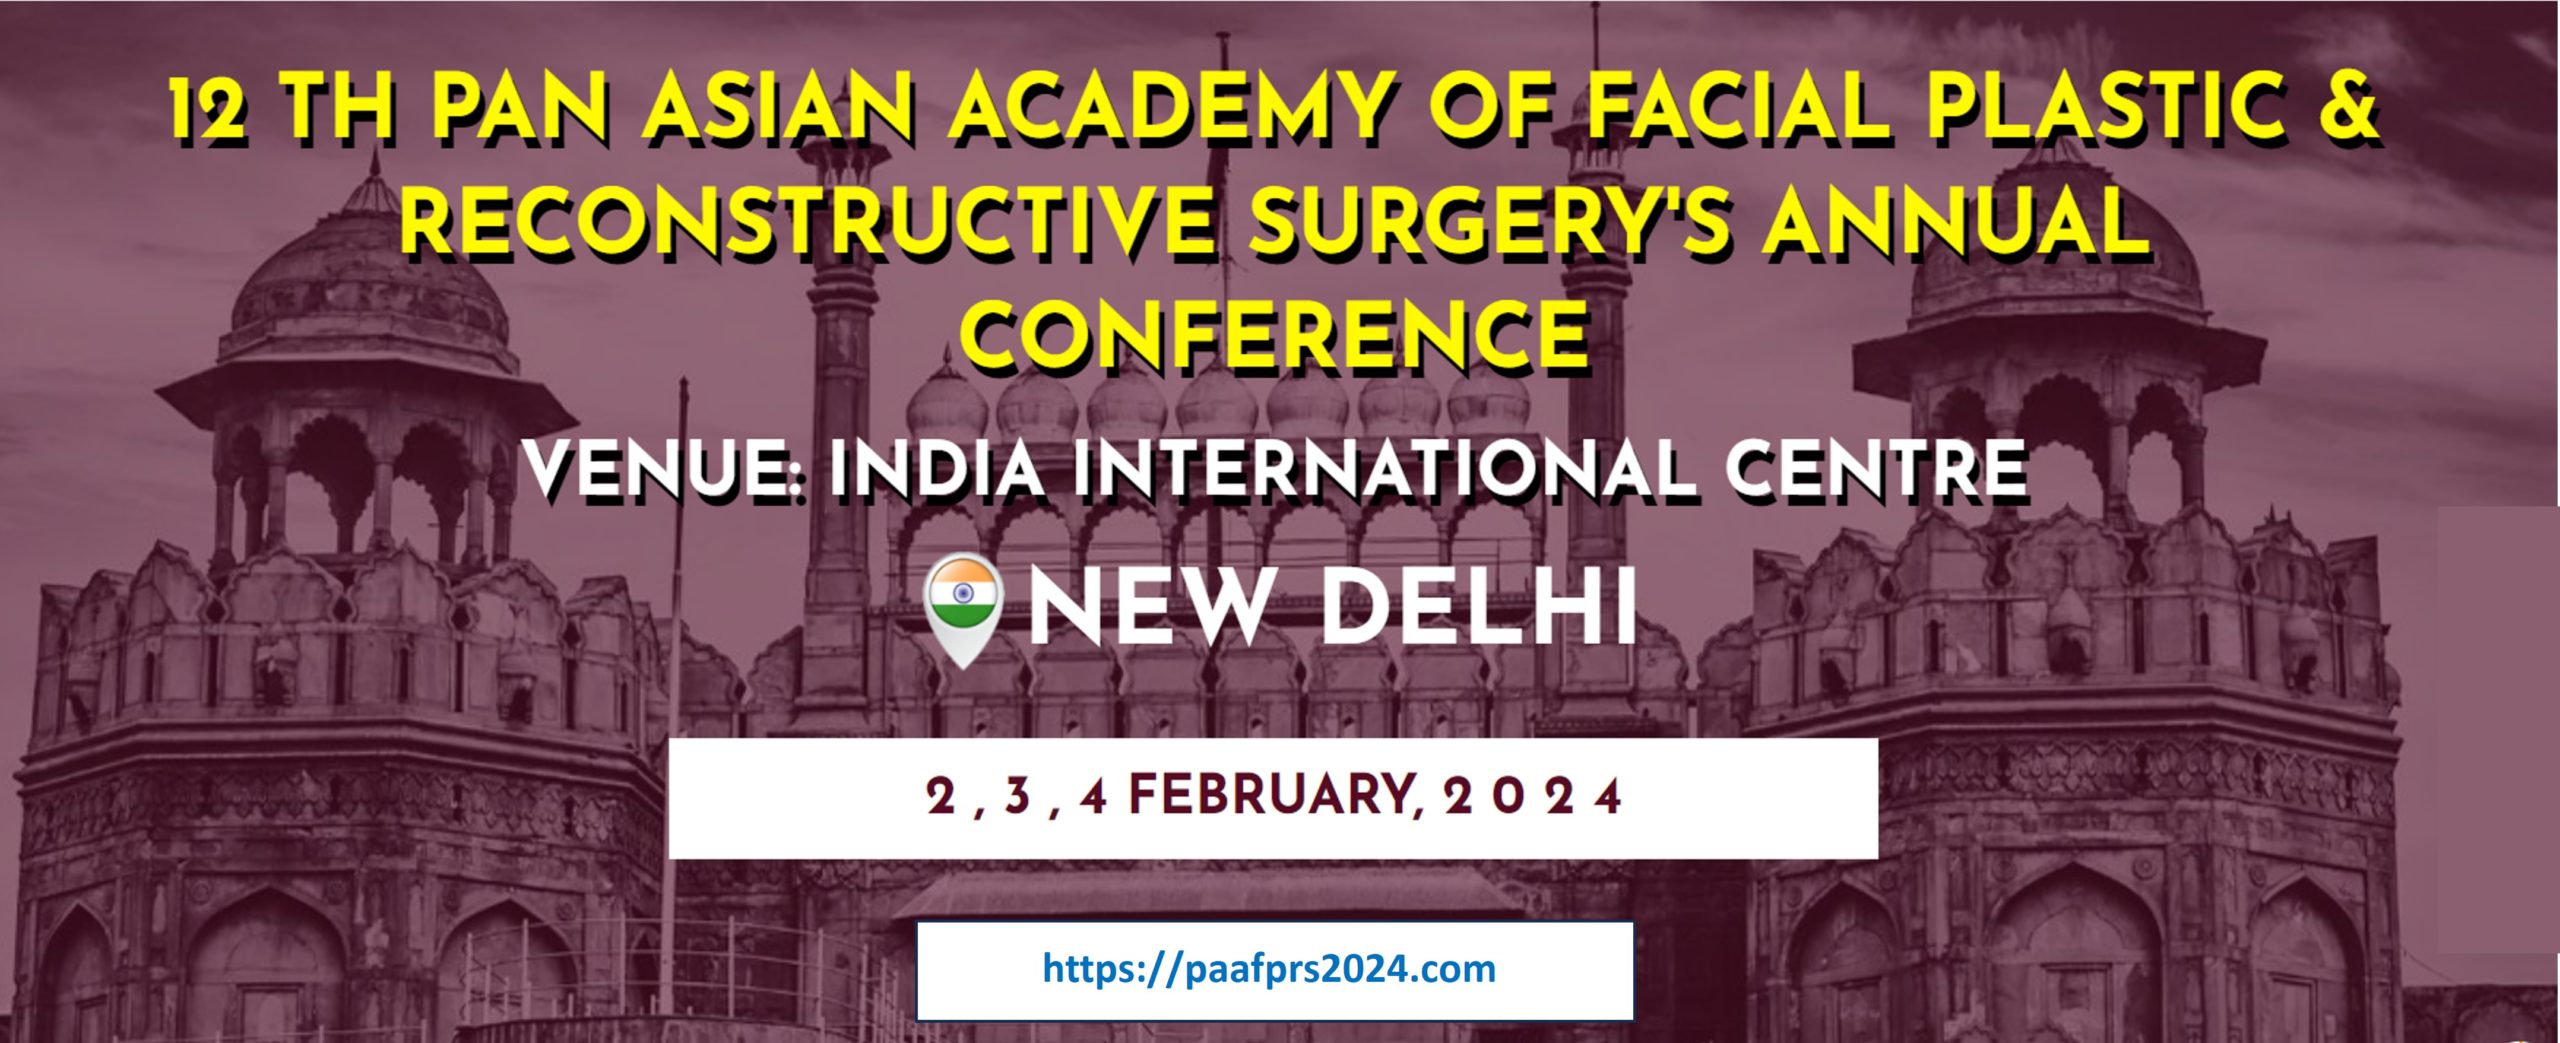 12th Pan Asian Academy of Facial Plastic & Reconstructive Surgery’s